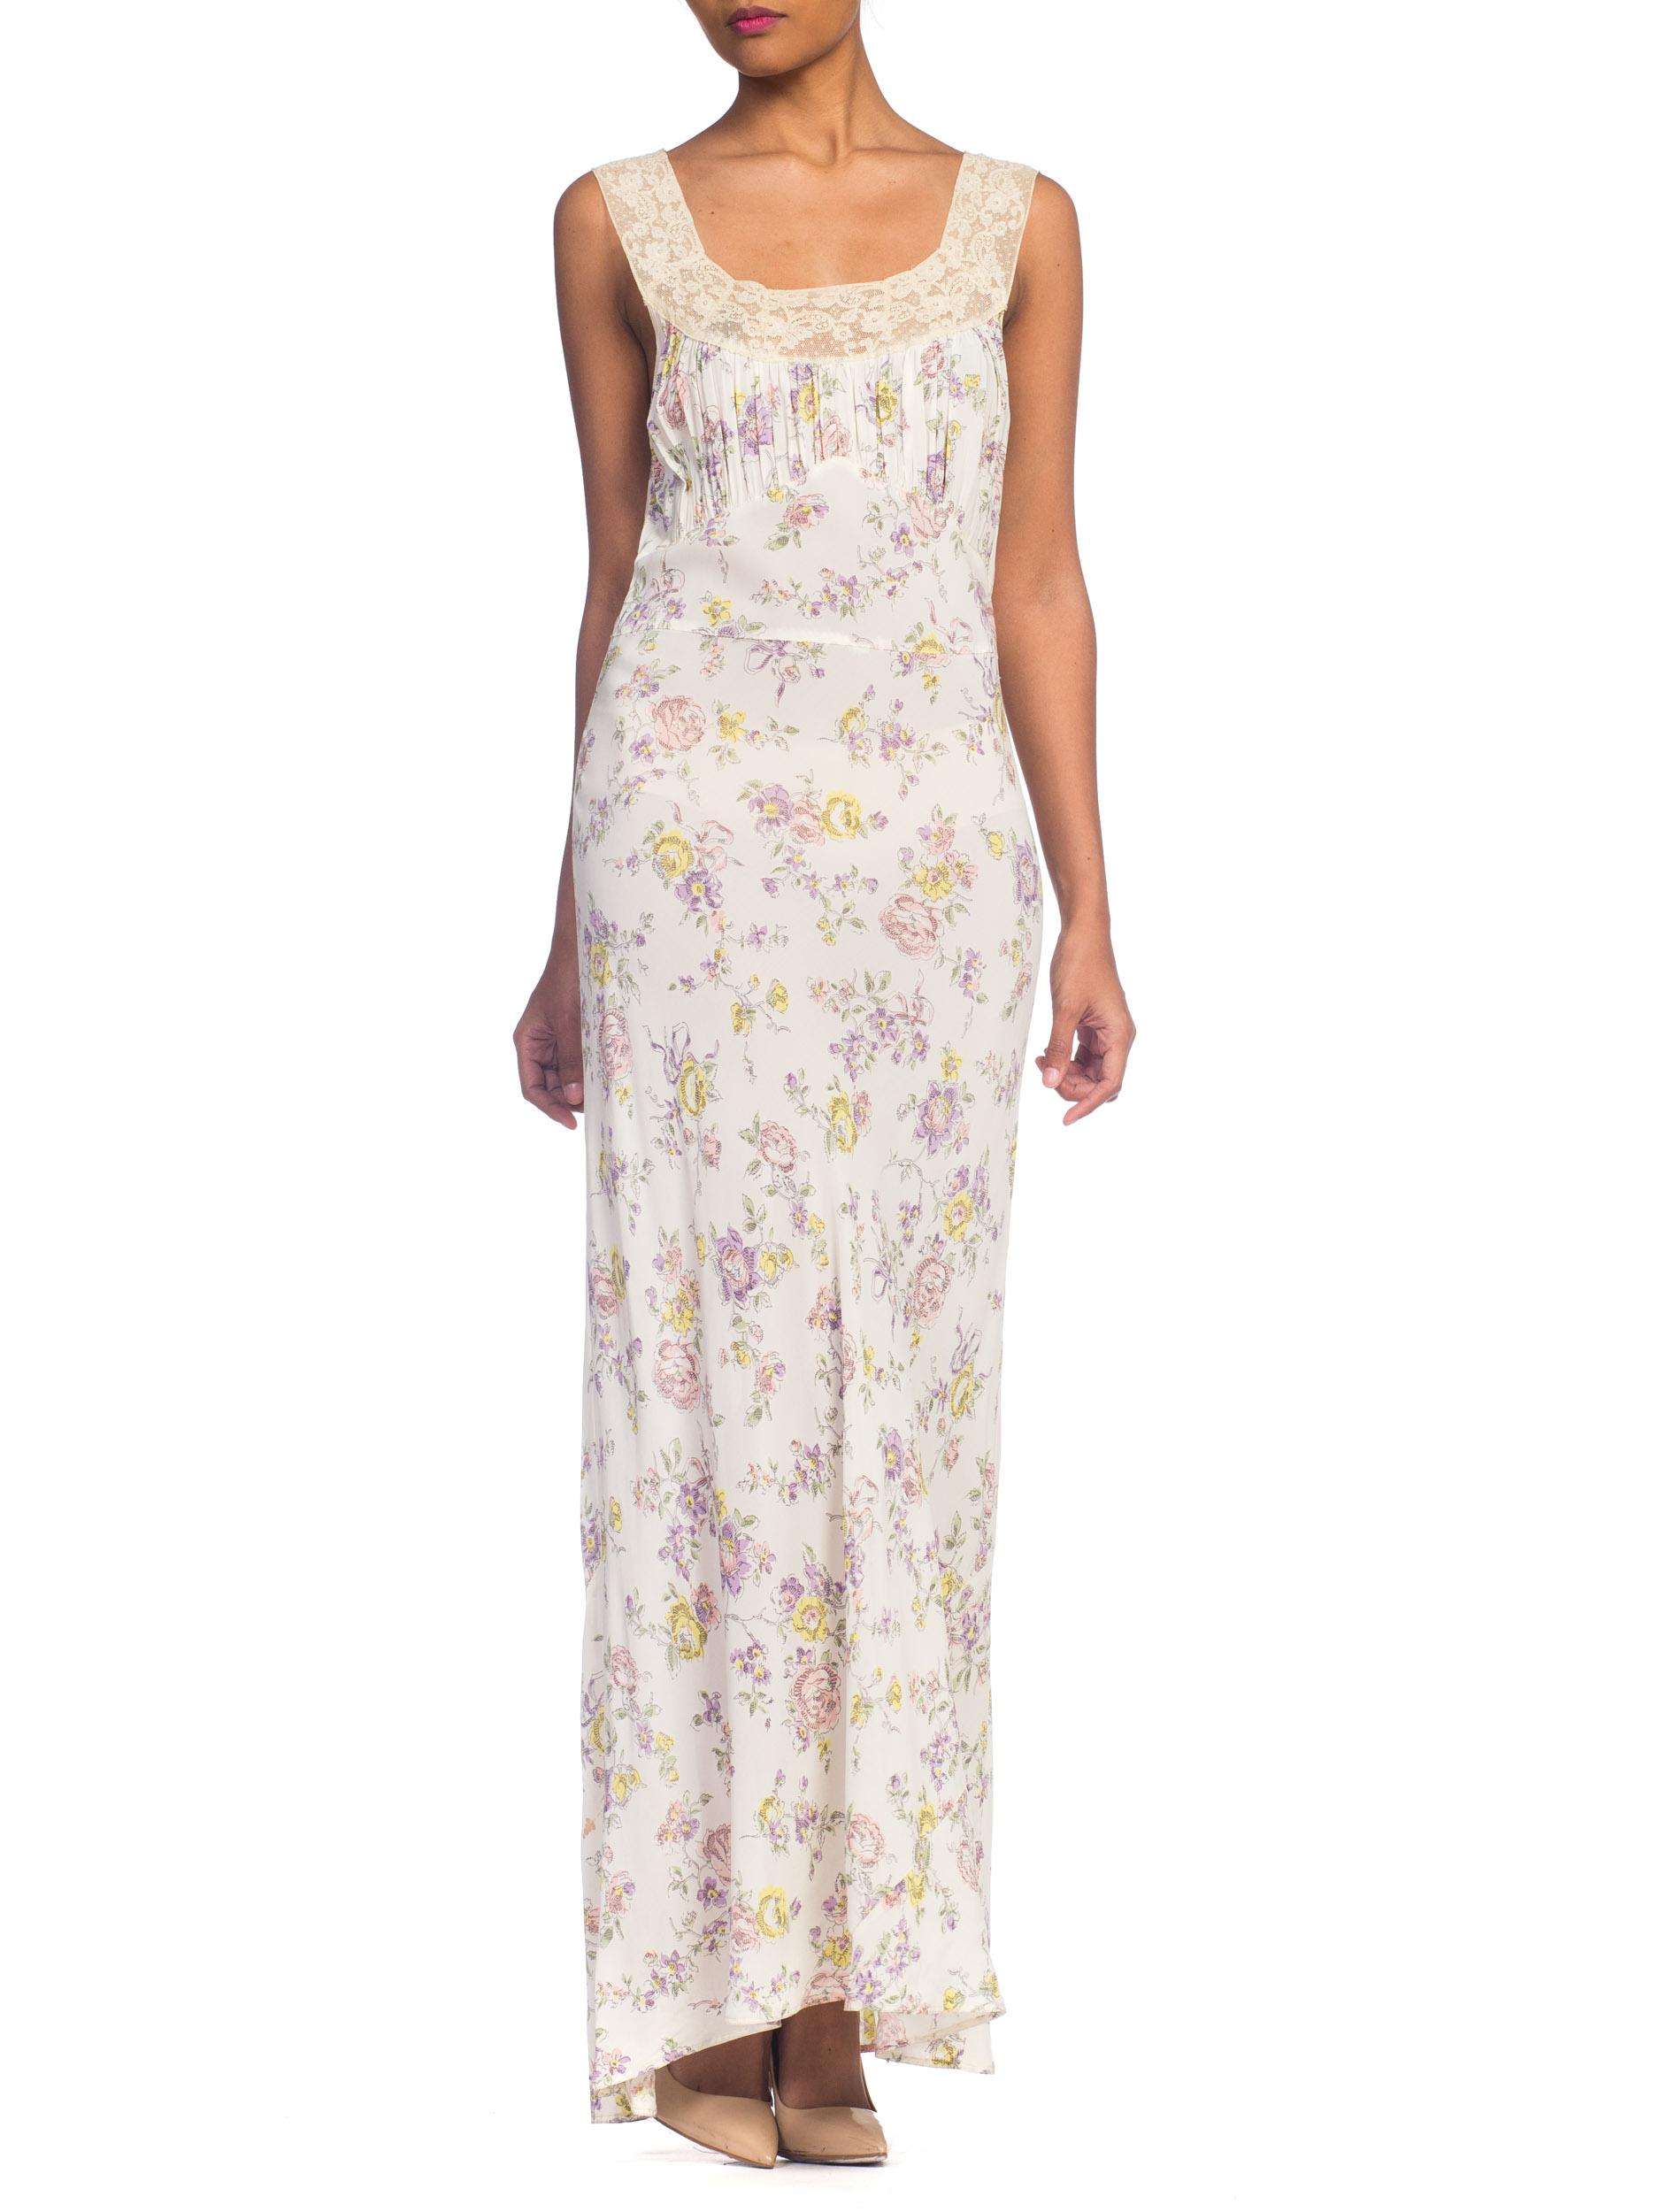 1930s Bias Cut Floral Rayon & Lace Negligee Slip Dress 6